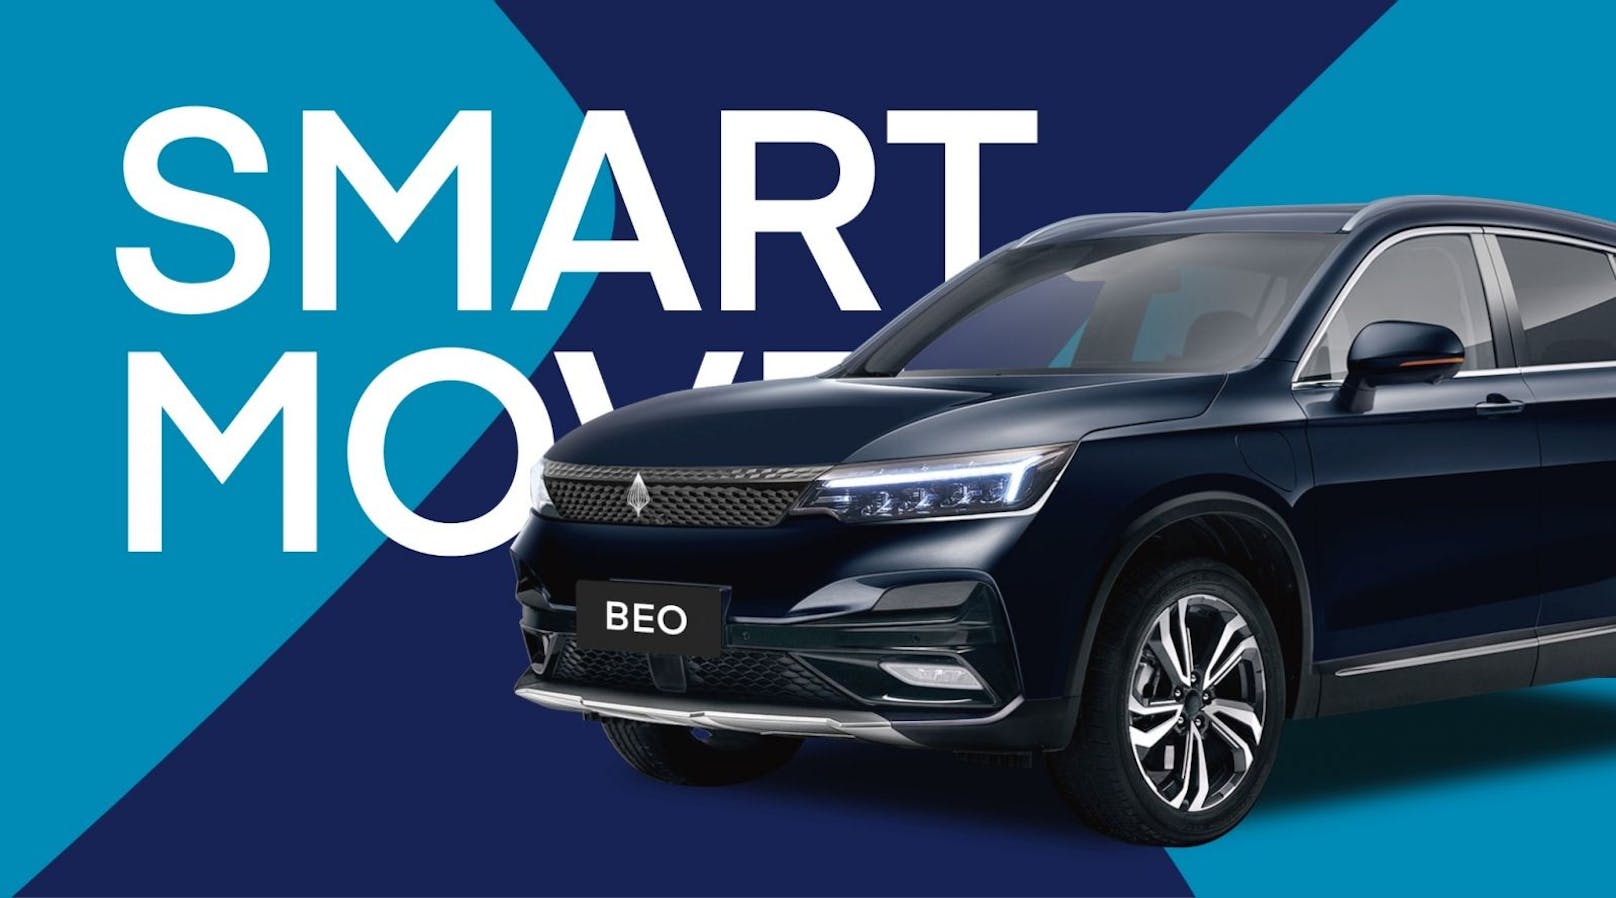 Elaris stellt neues Modell BEO vor: Smarter Hightech - SUV zum attraktiven Preis.